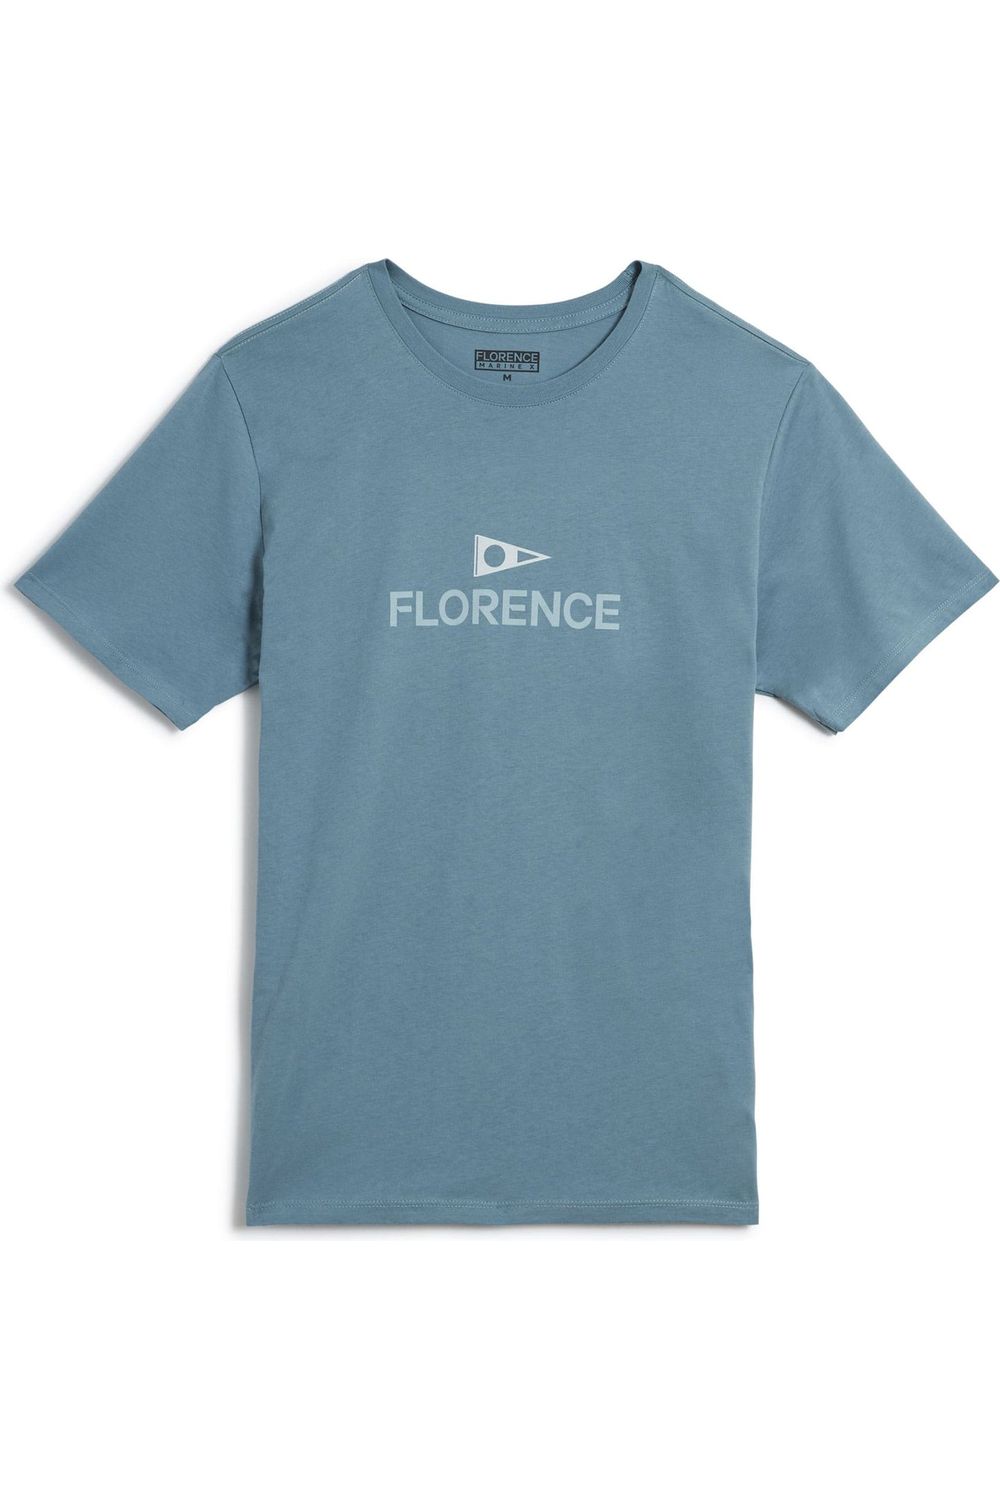 Florence Marine X Logo T-Shirt Citadel